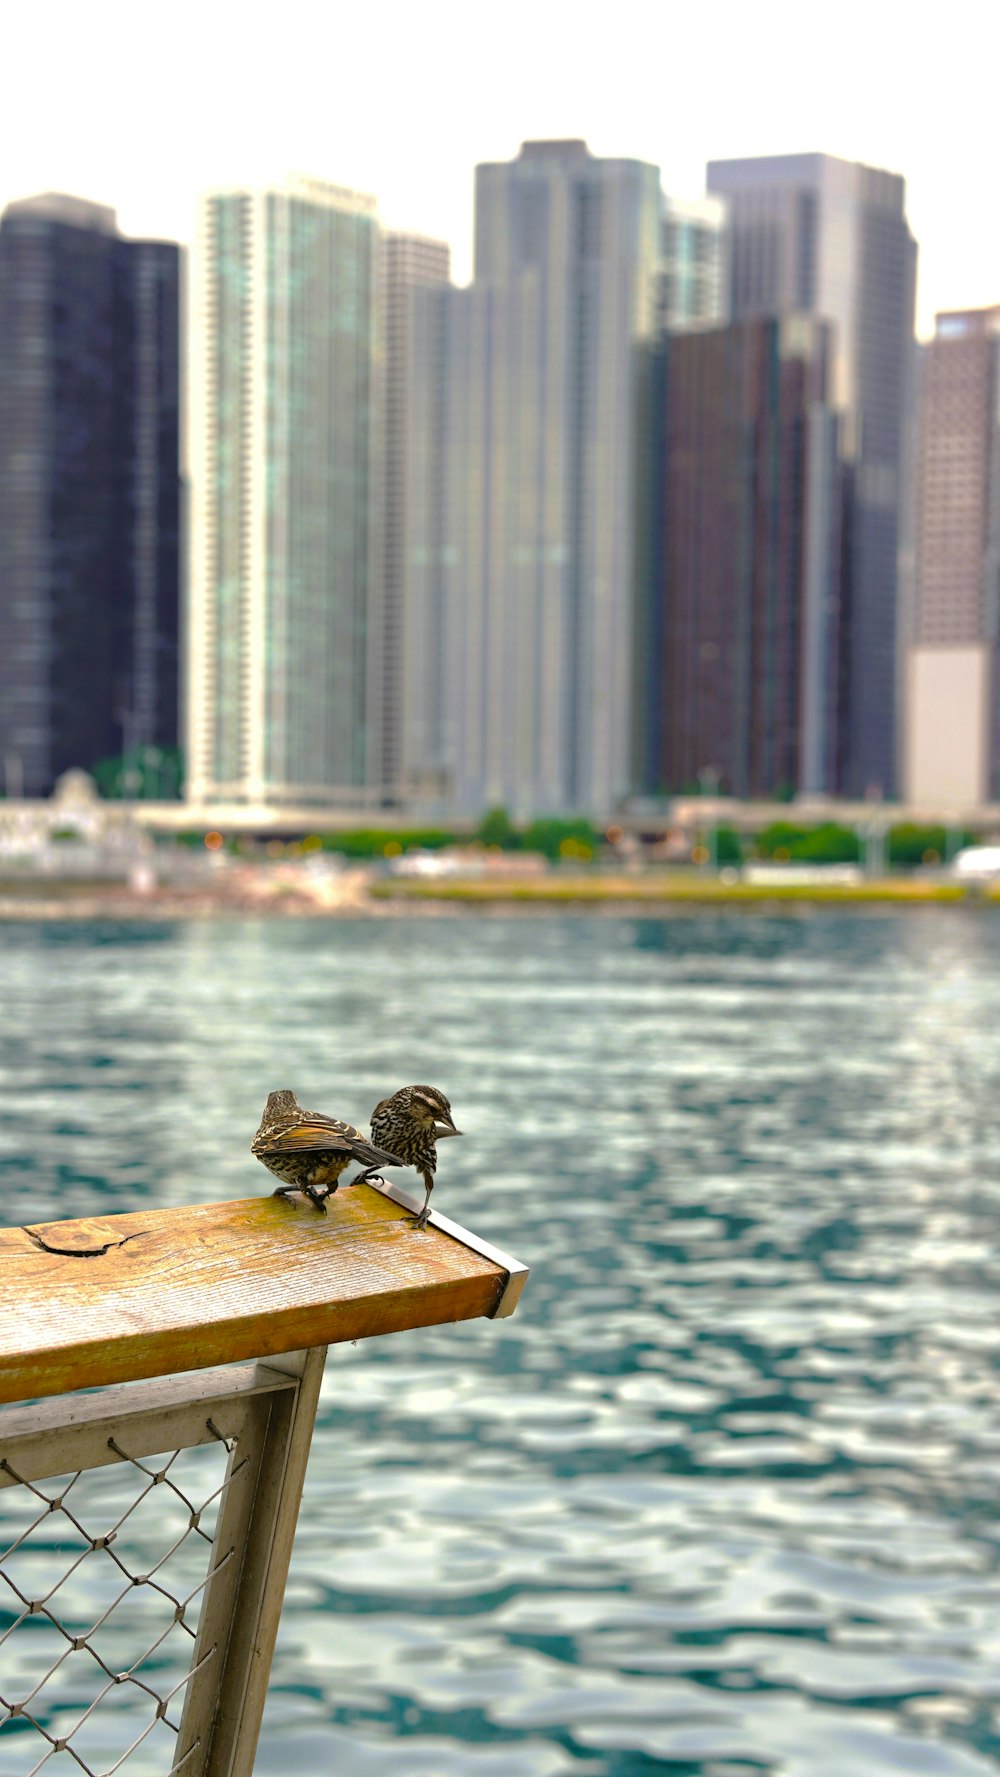 birds on a bench